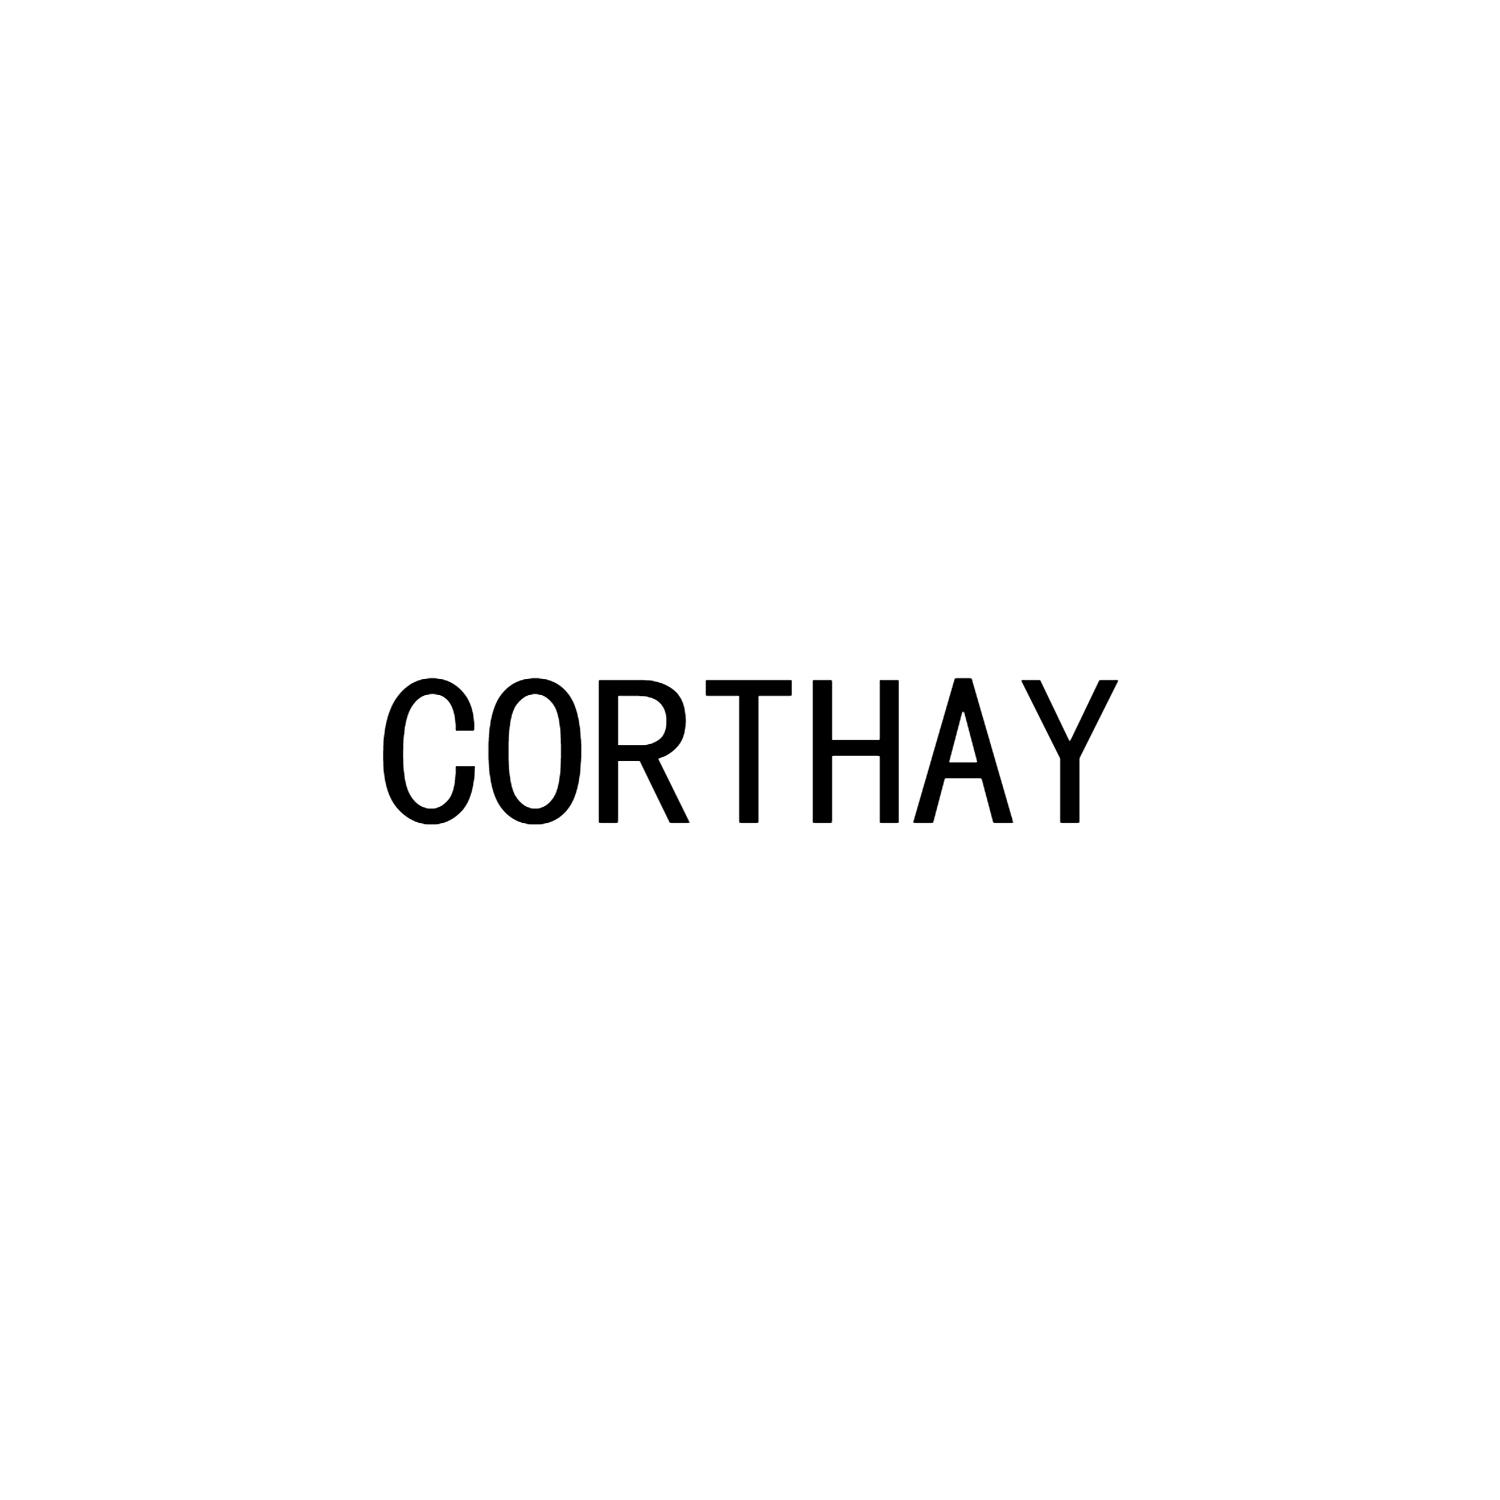 CORTHAY